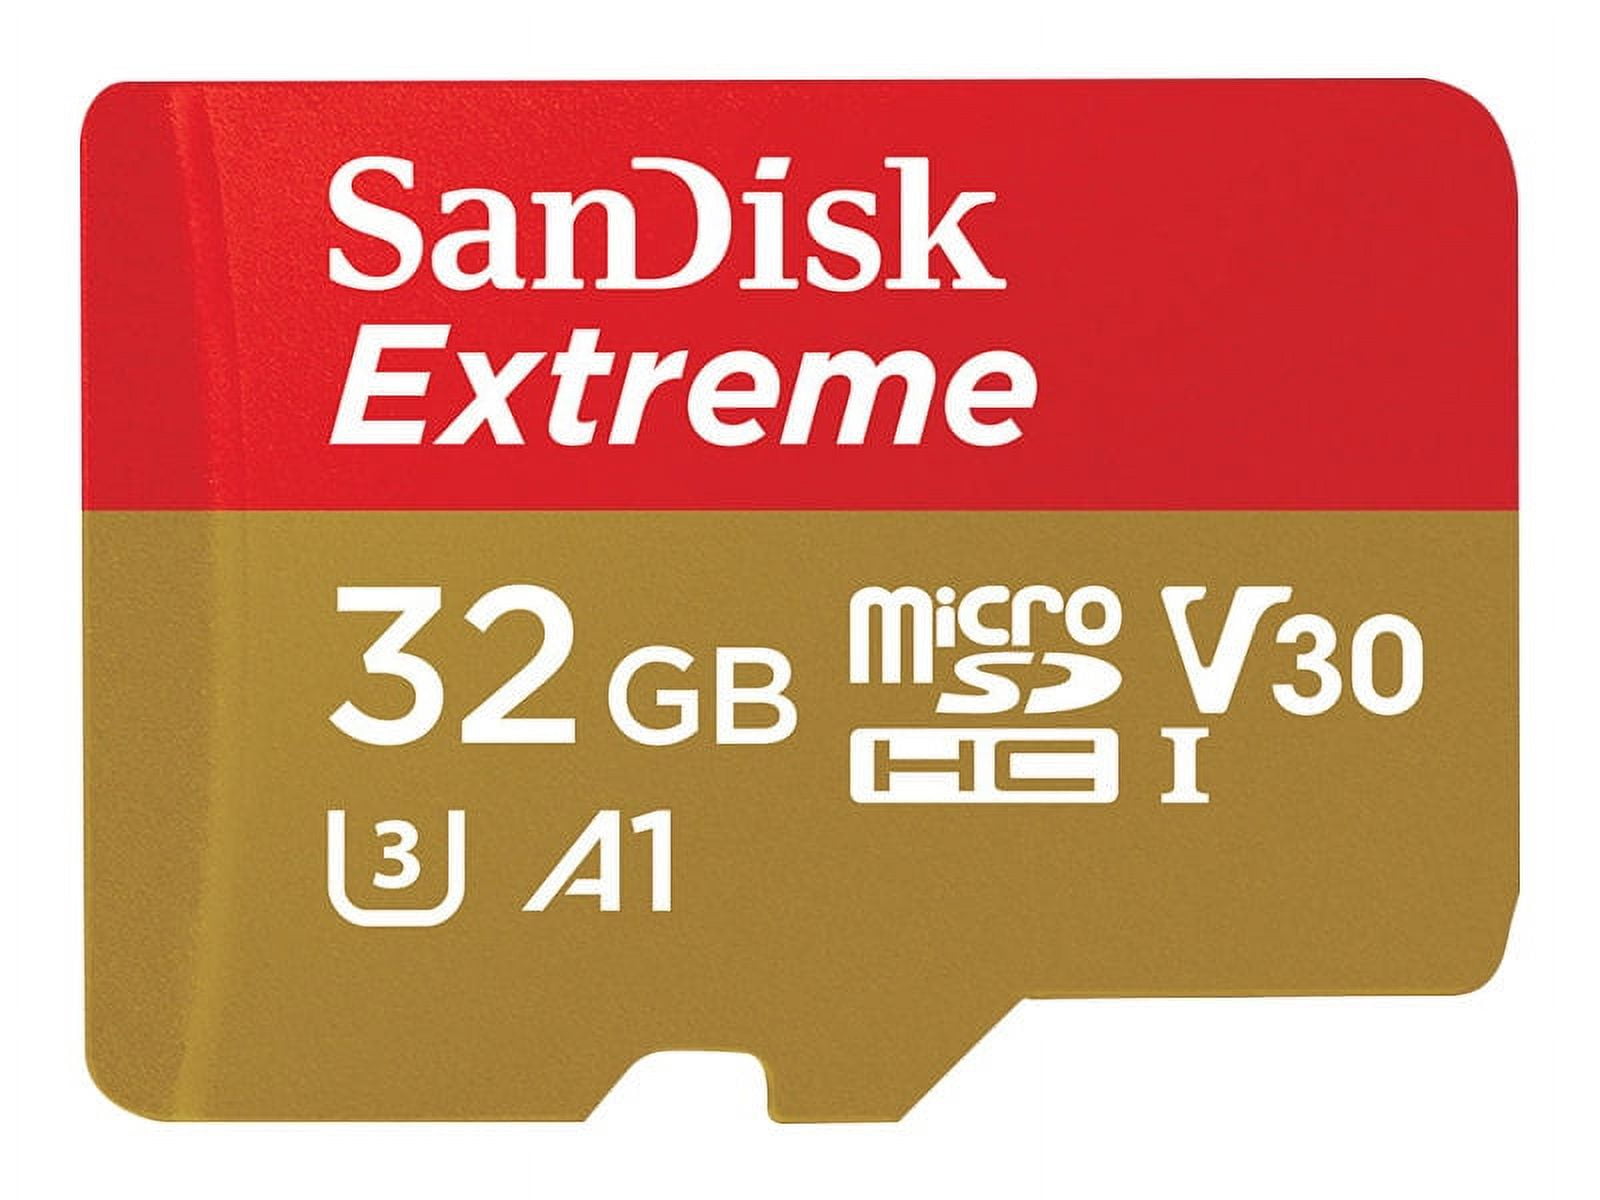 SANDISK EXTREME PRO 128 GB MICRO SDXC UHS-I SDSQXCY-128G